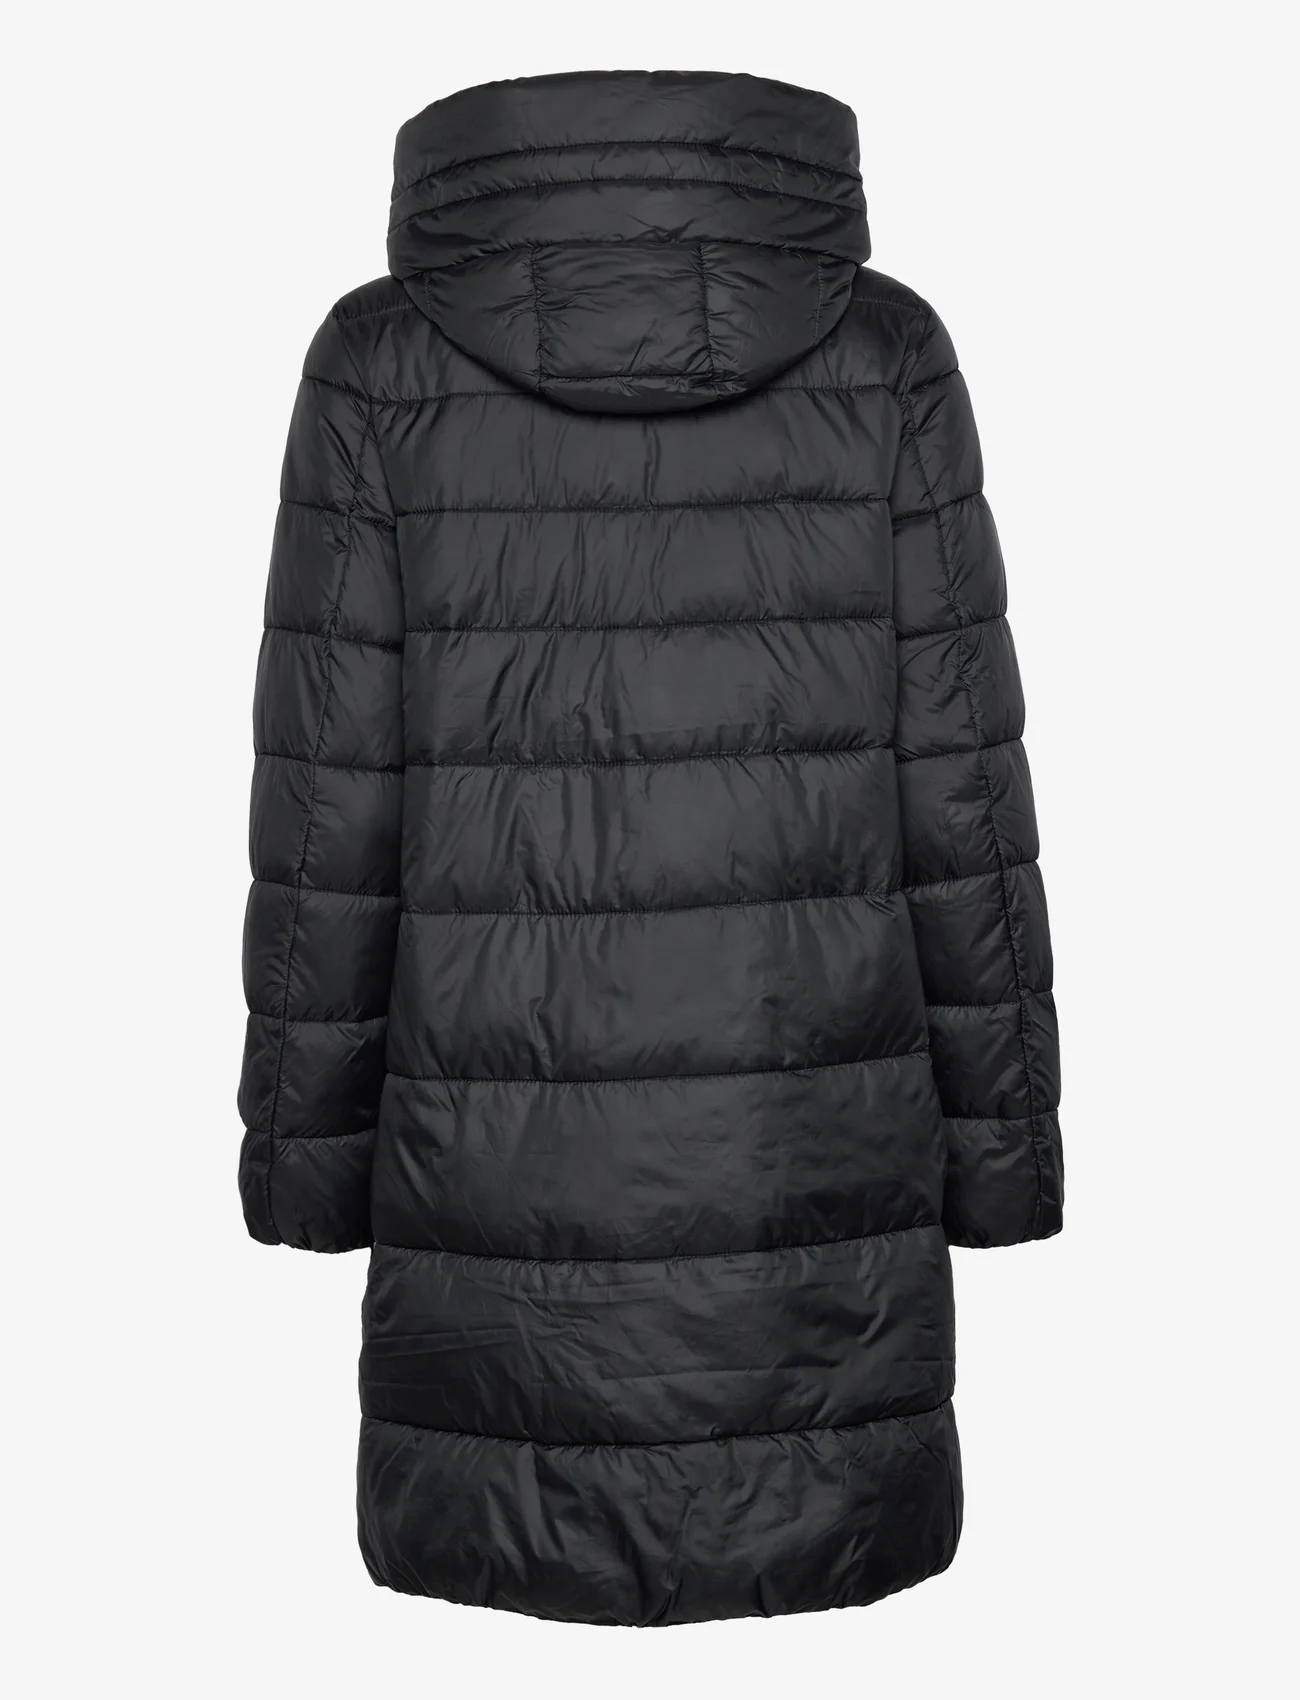 Esprit Casual - Women Coats woven regular - winterjacken - black - 1